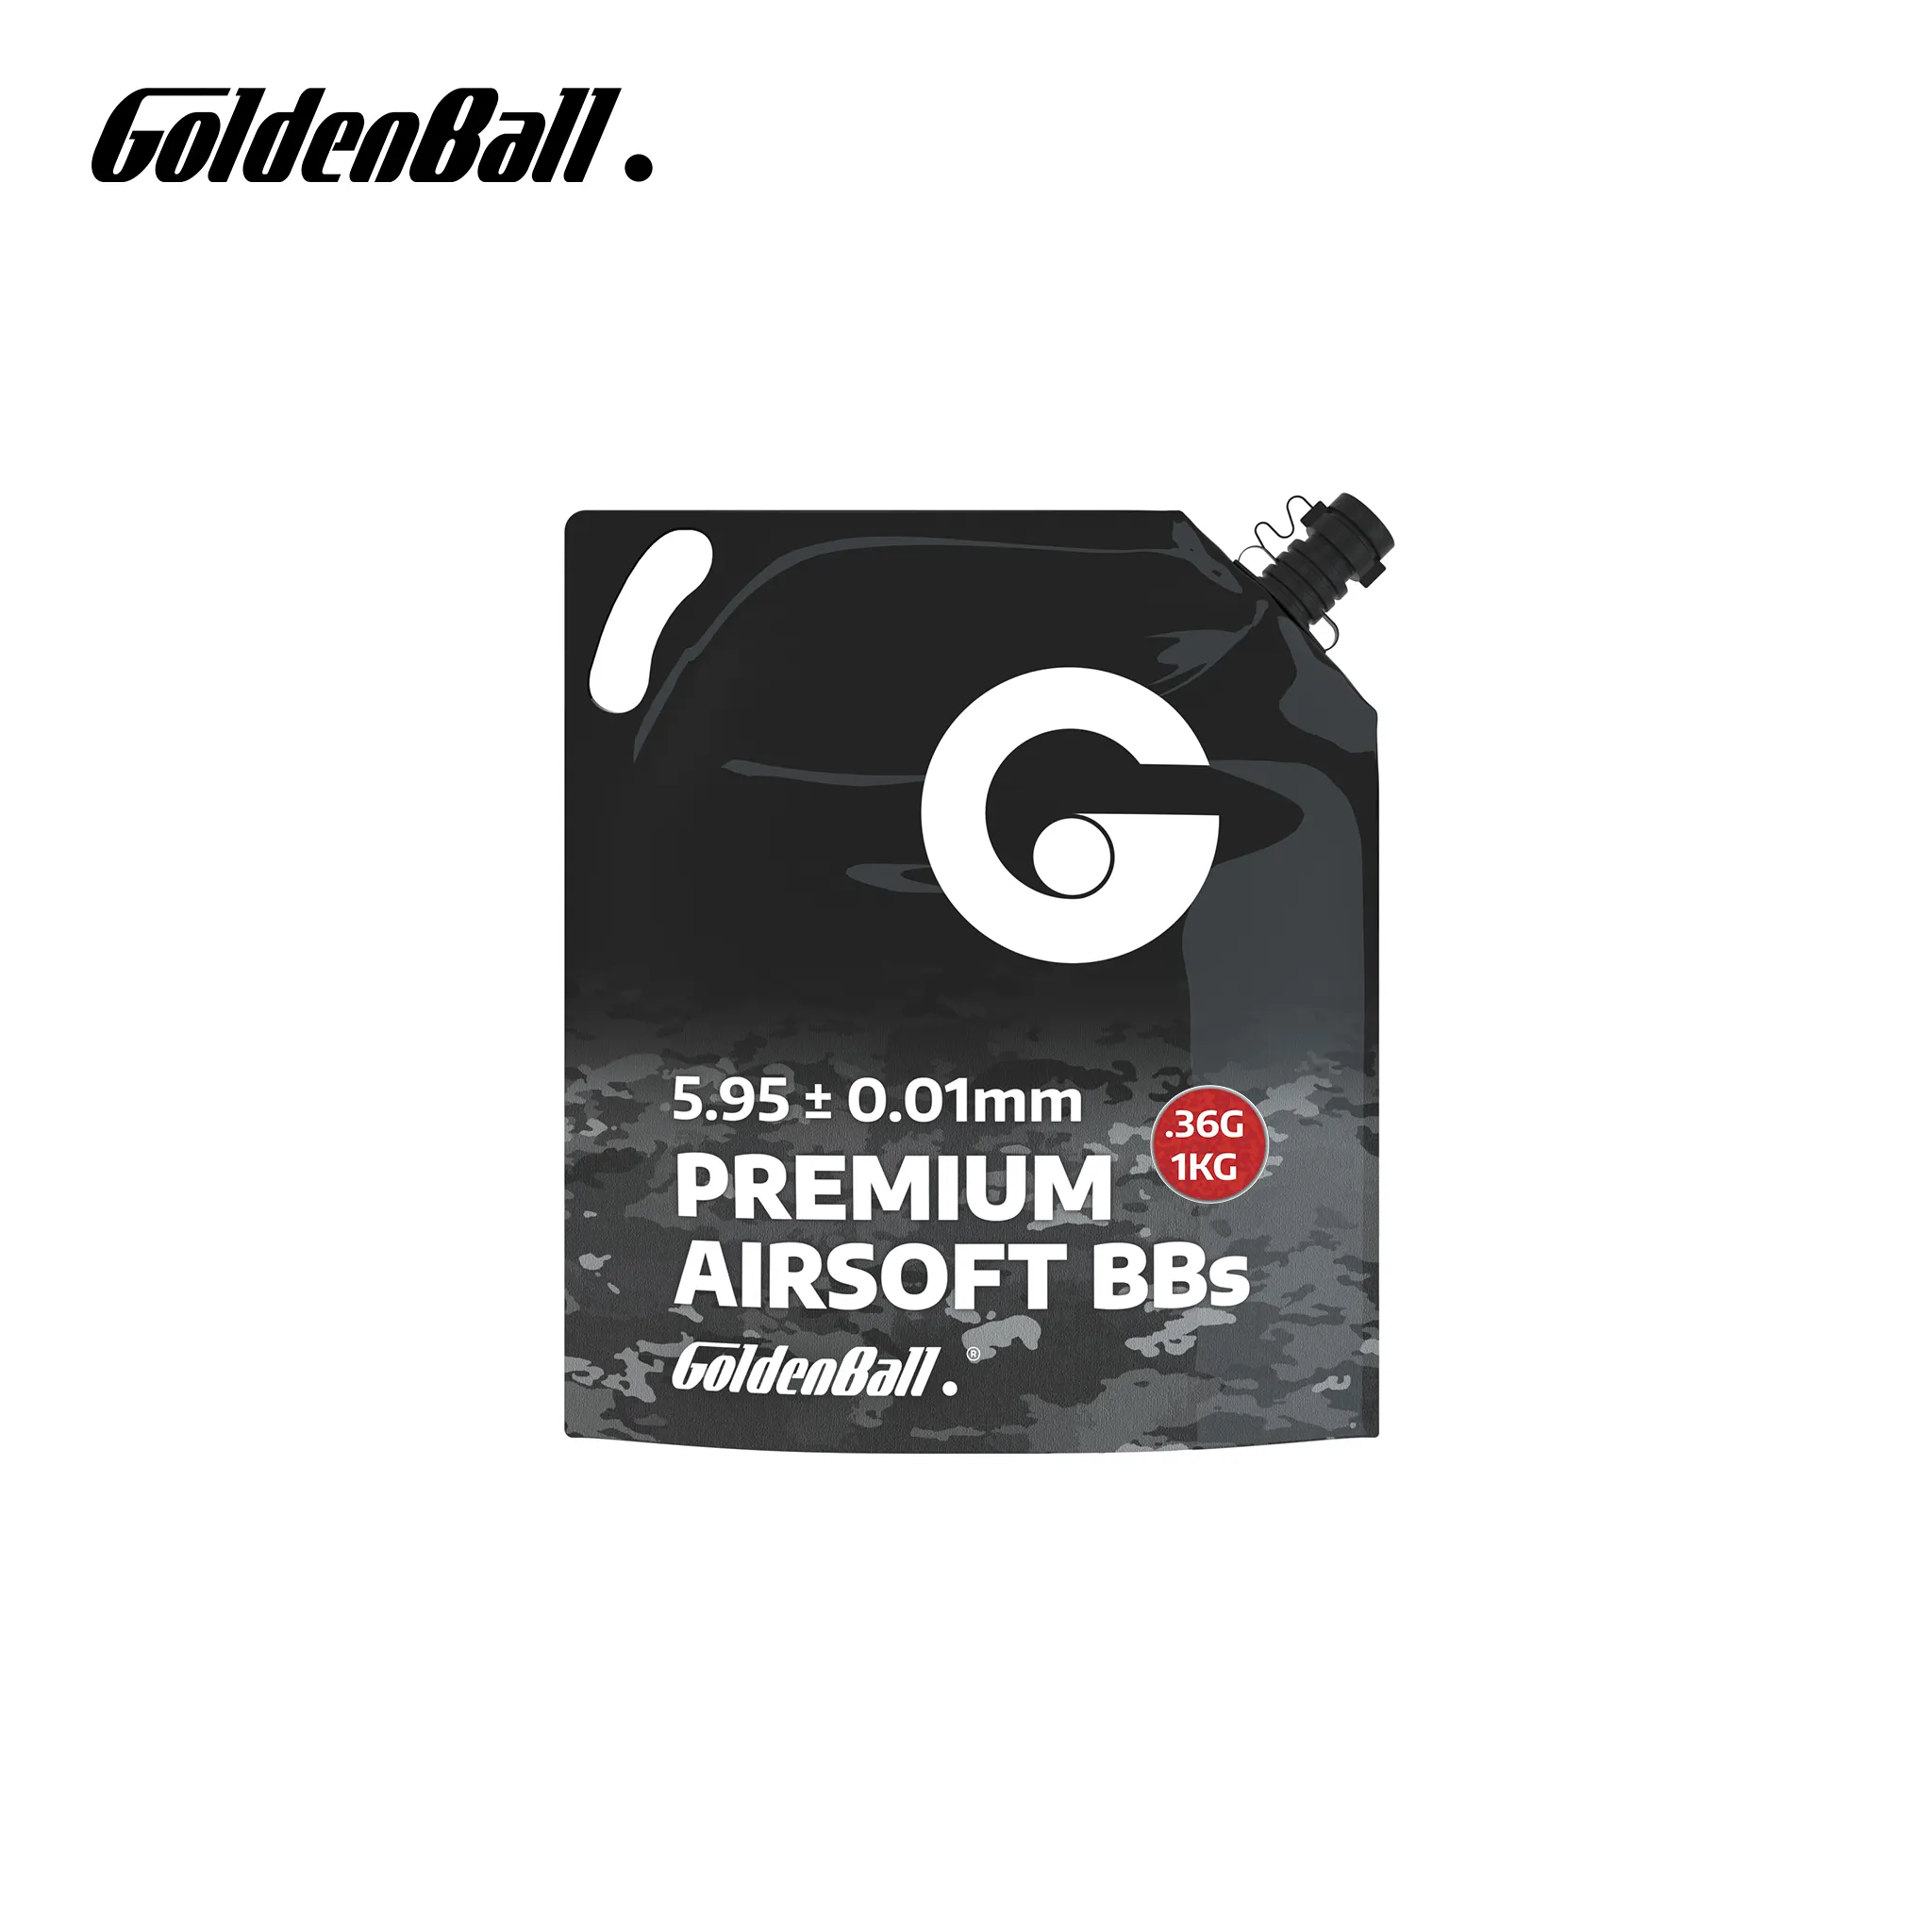 Goldenball 0,36g PROFESIONAL Premium Airsoft BB Pellets 5,95 +/-0,01mm 1kg 2777 rondas